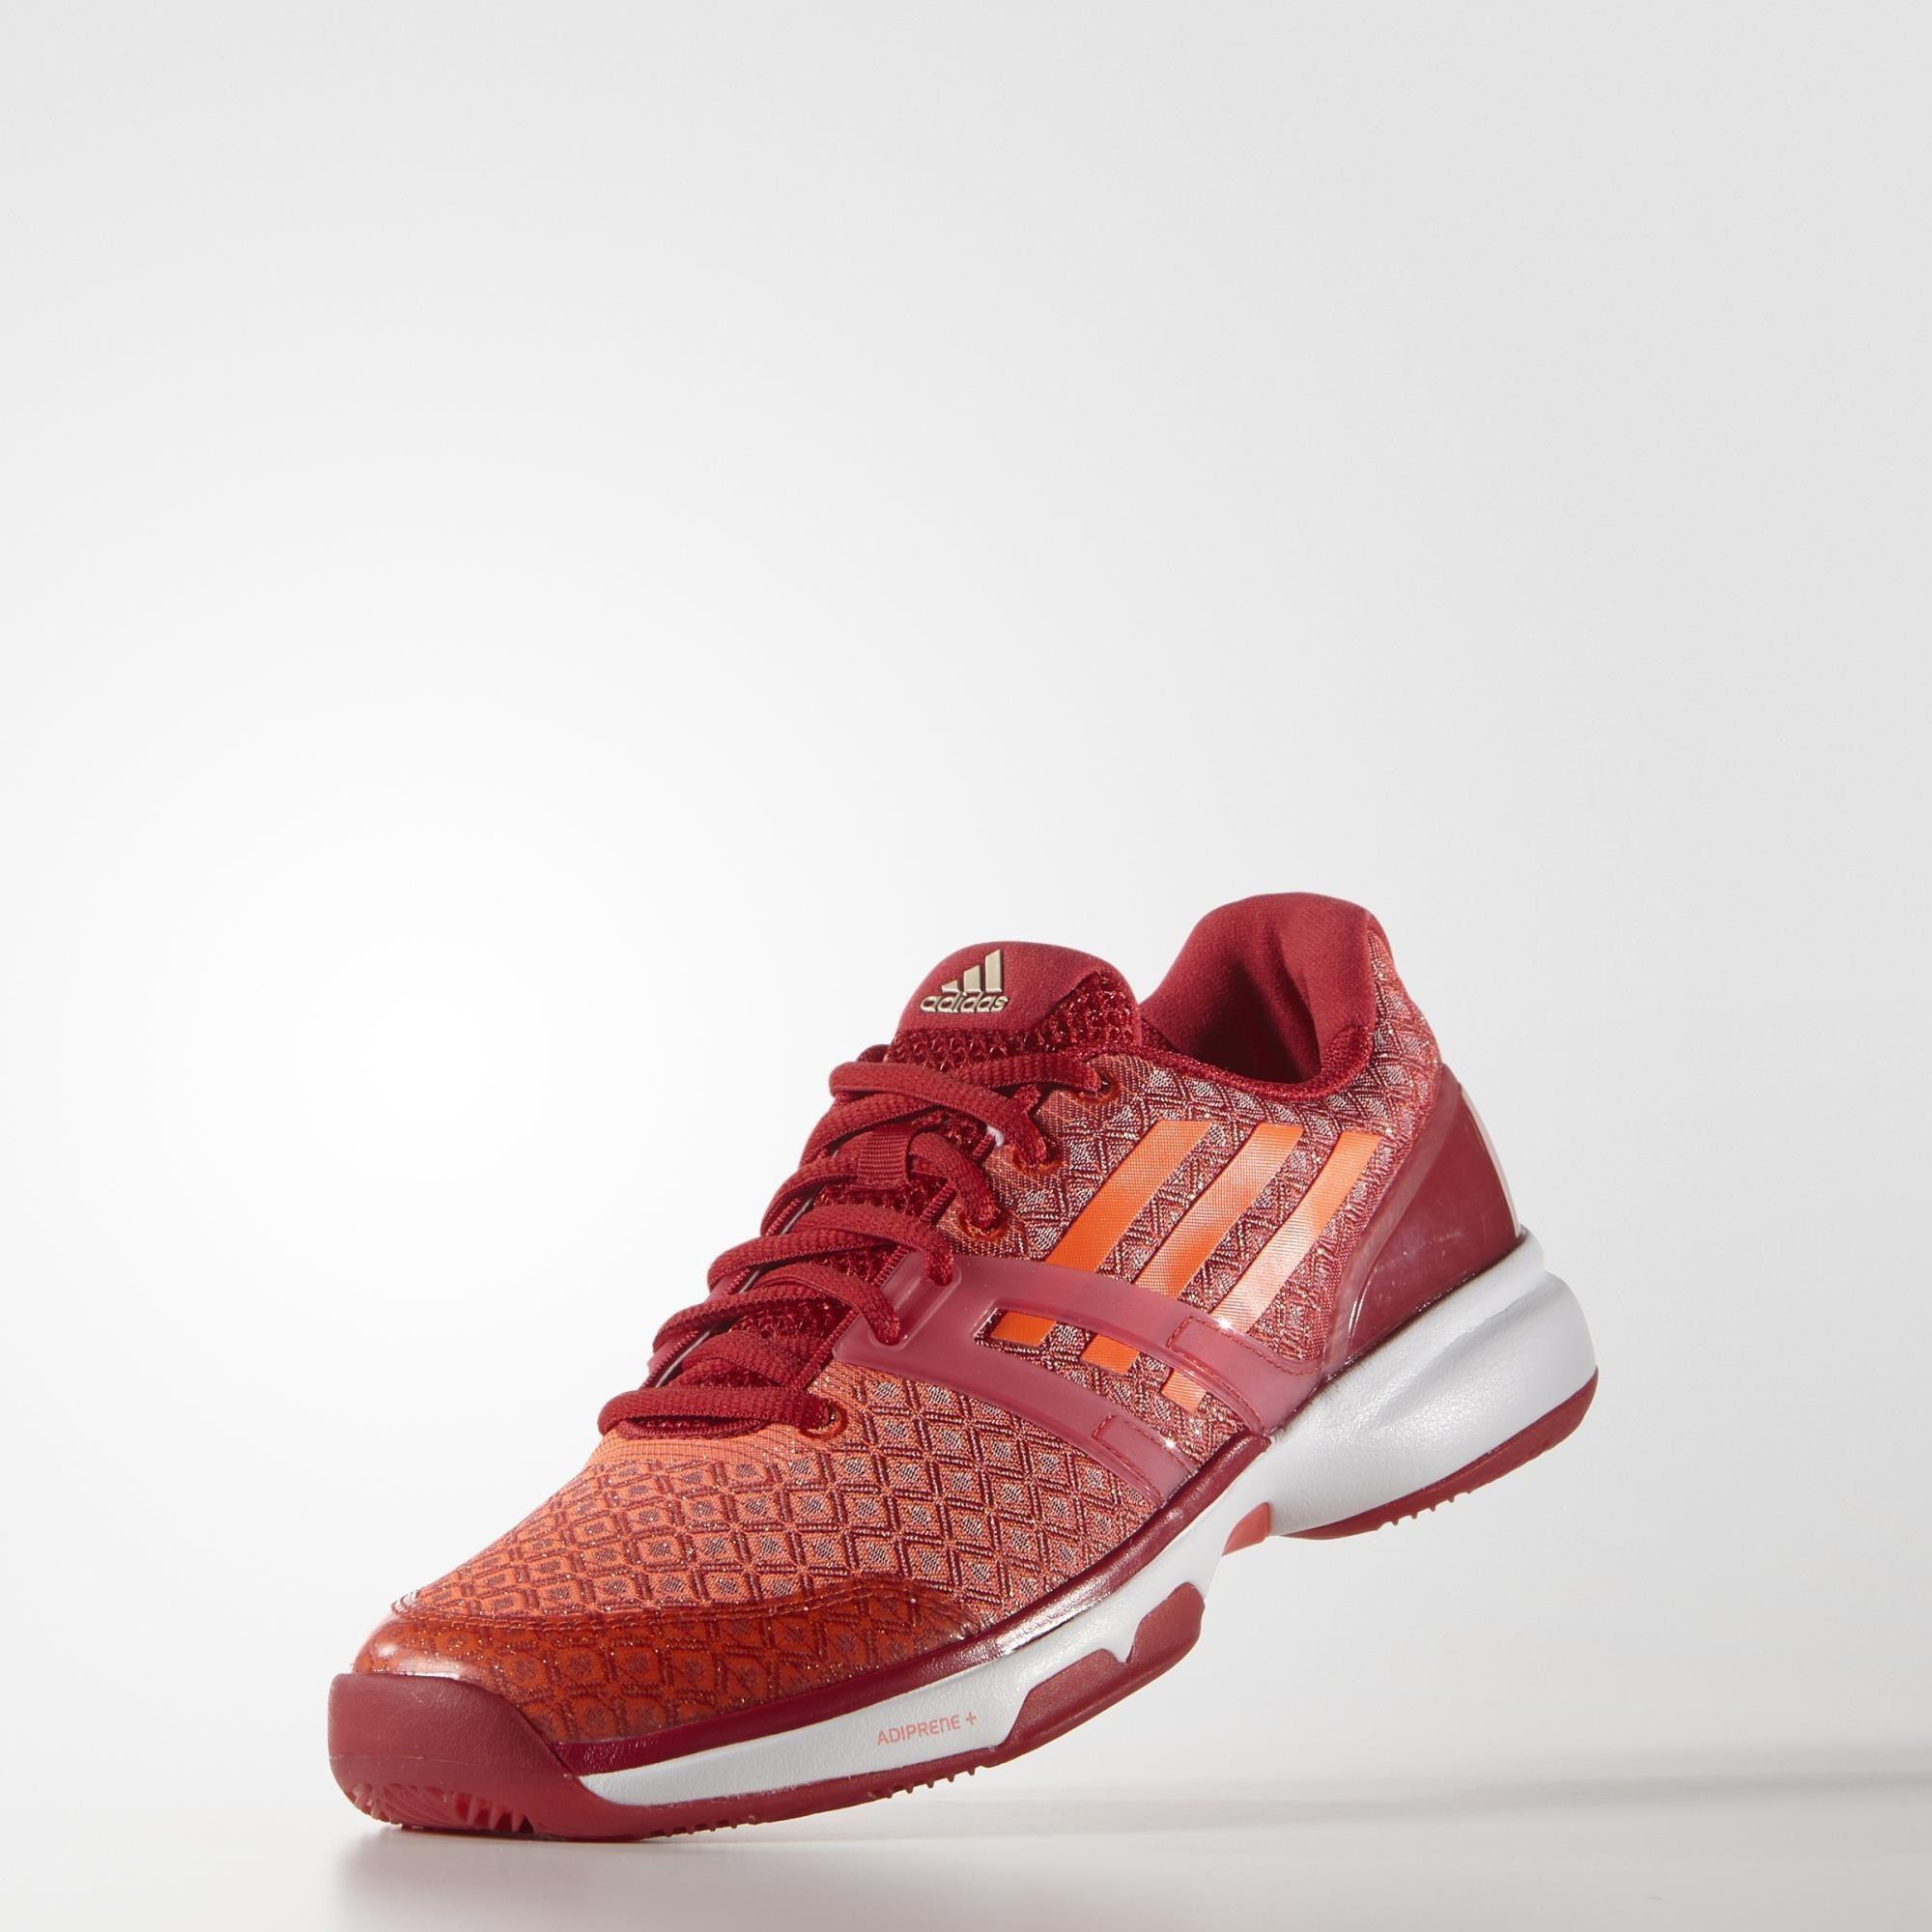 Adidas Womens Adizero Ubersonic Tennis Shoes - Power Red/Solar Red ...